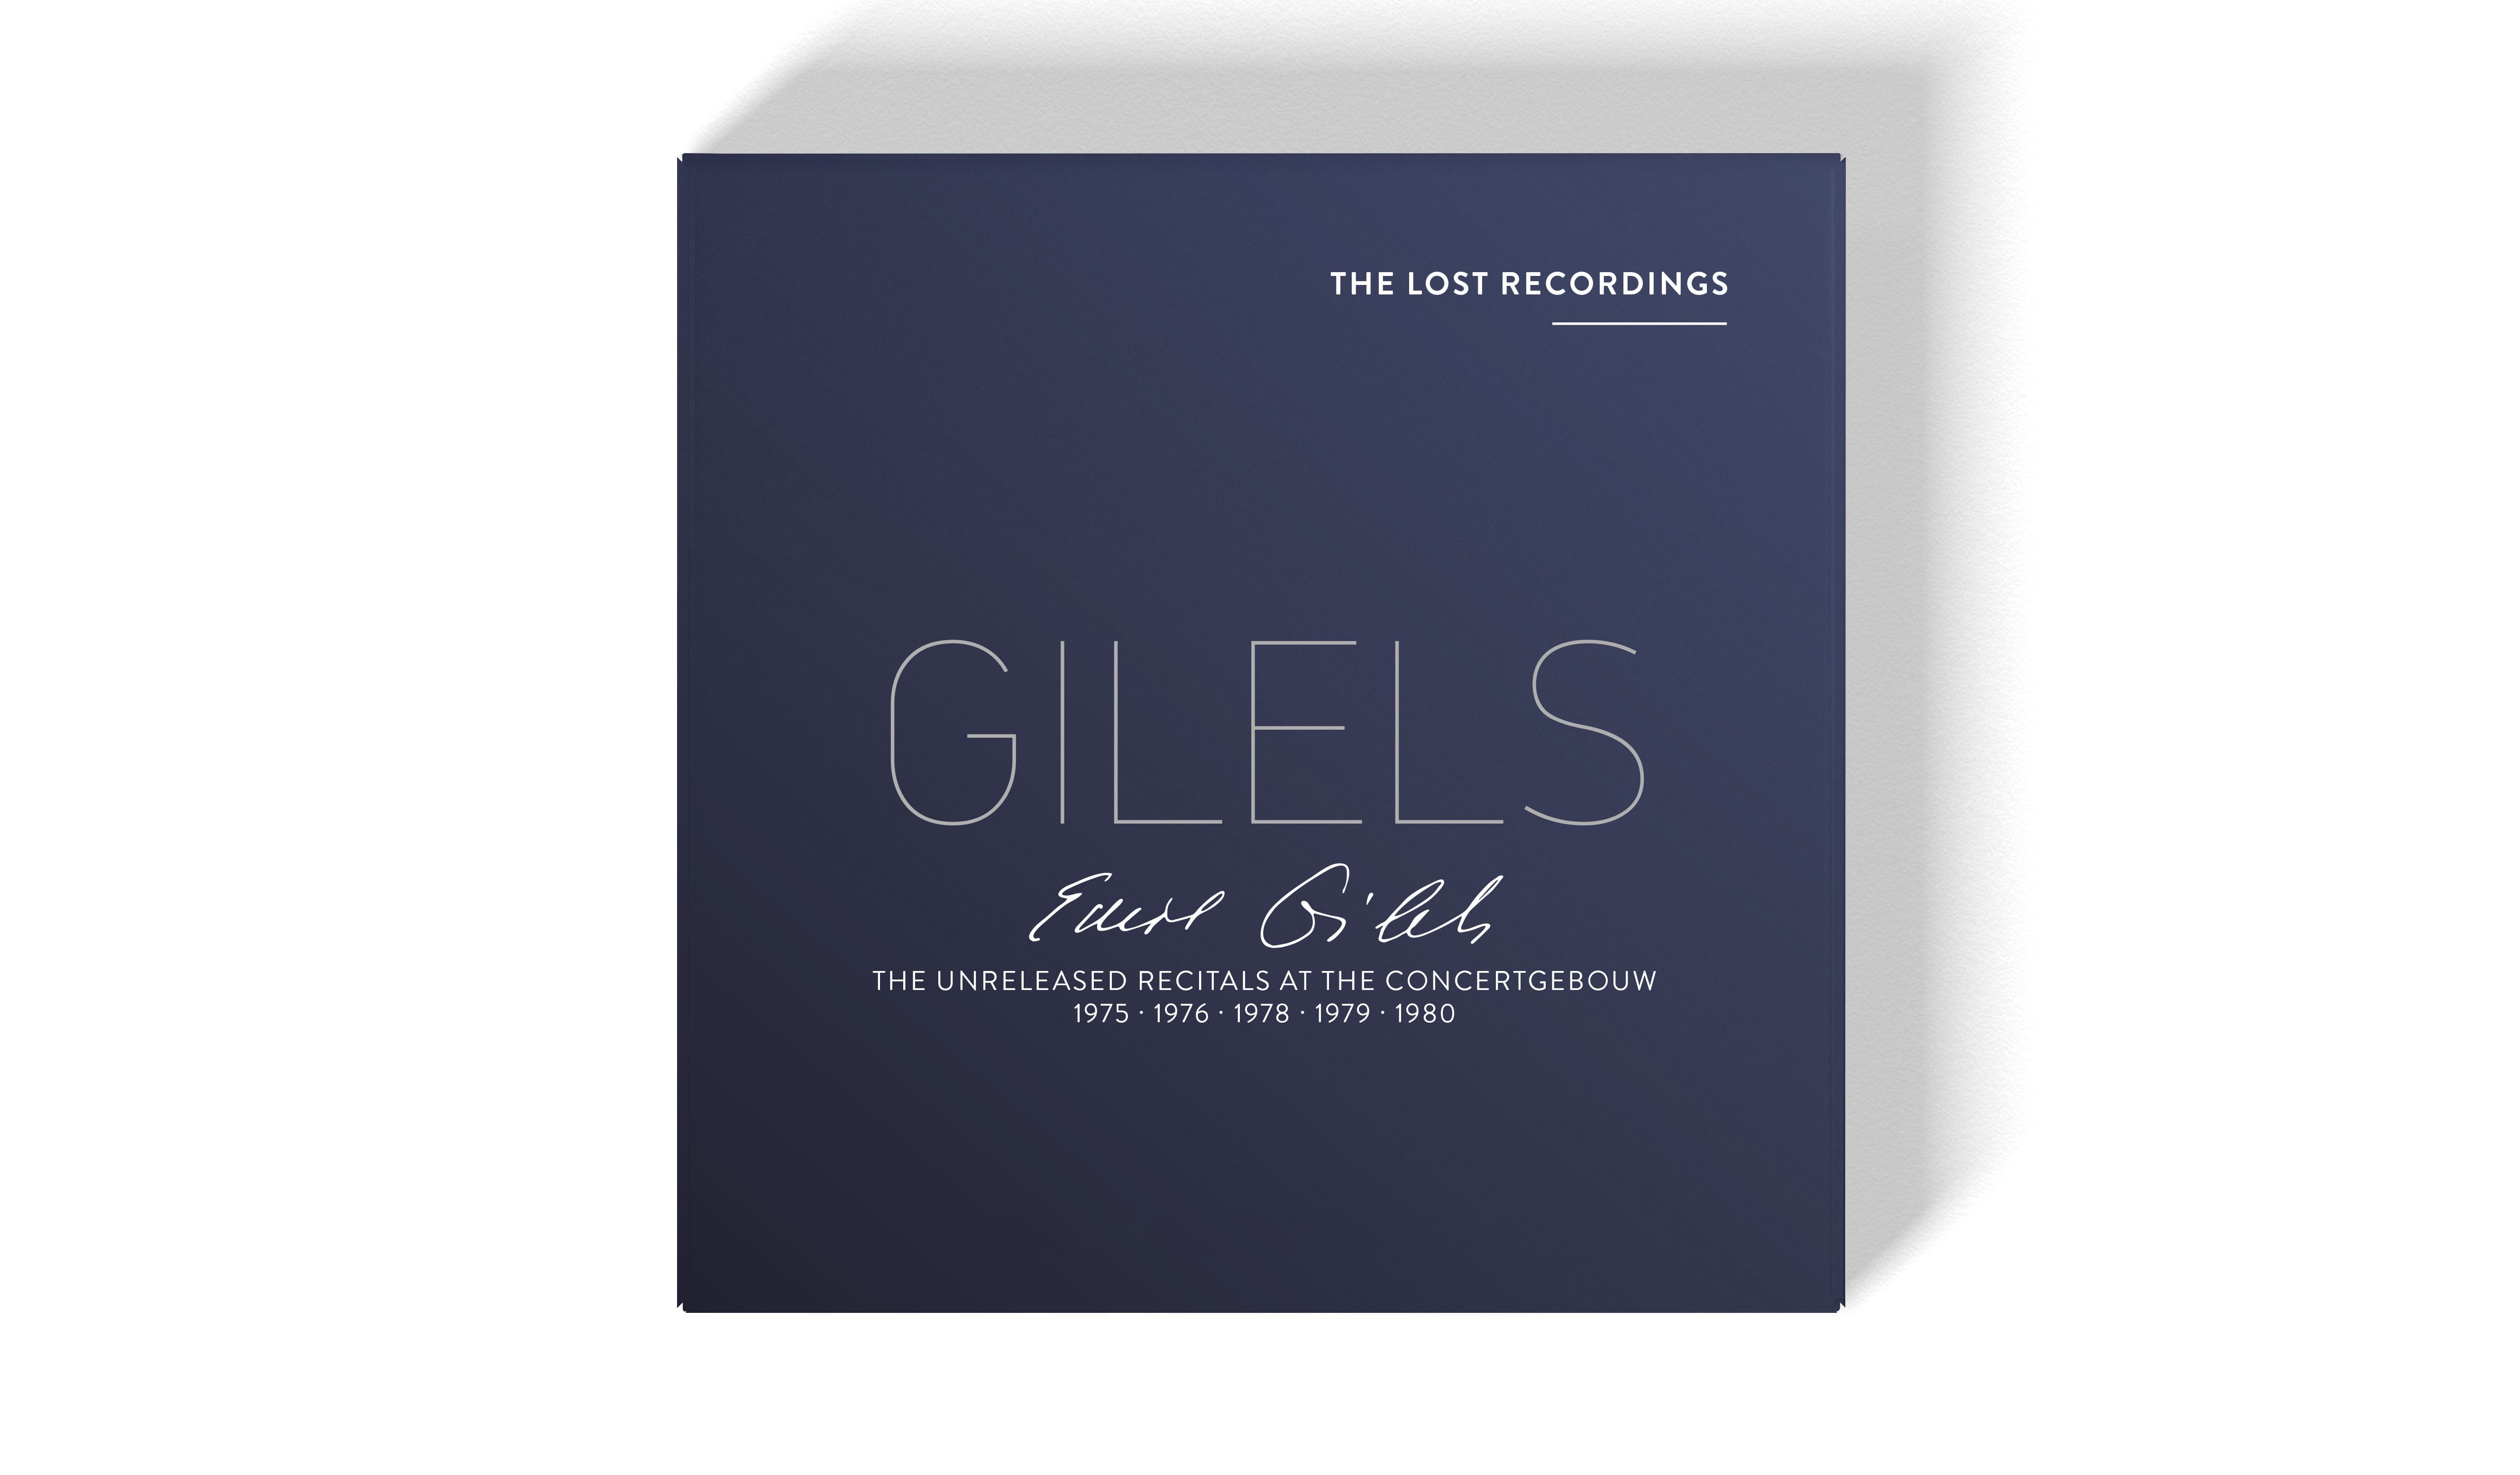 Emil Gilels - The Unreleased recitals at the Concertgebouw - Coffret 5 CD